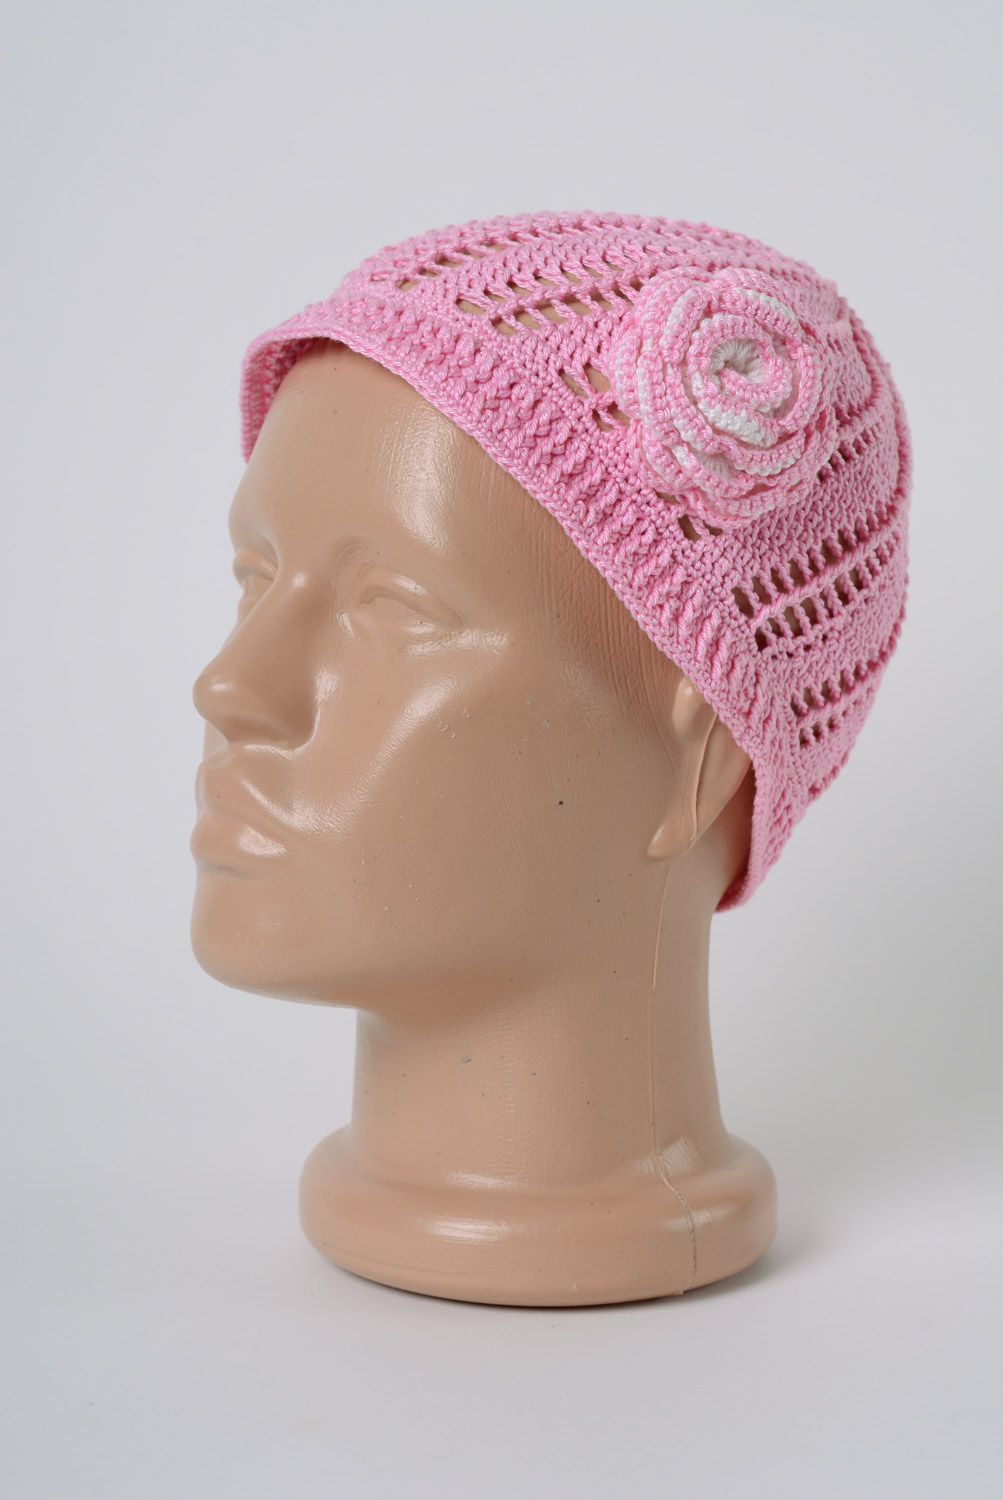 Gorro para mujer tejido a ganchillo con flor rosada original hecho a mano foto 1